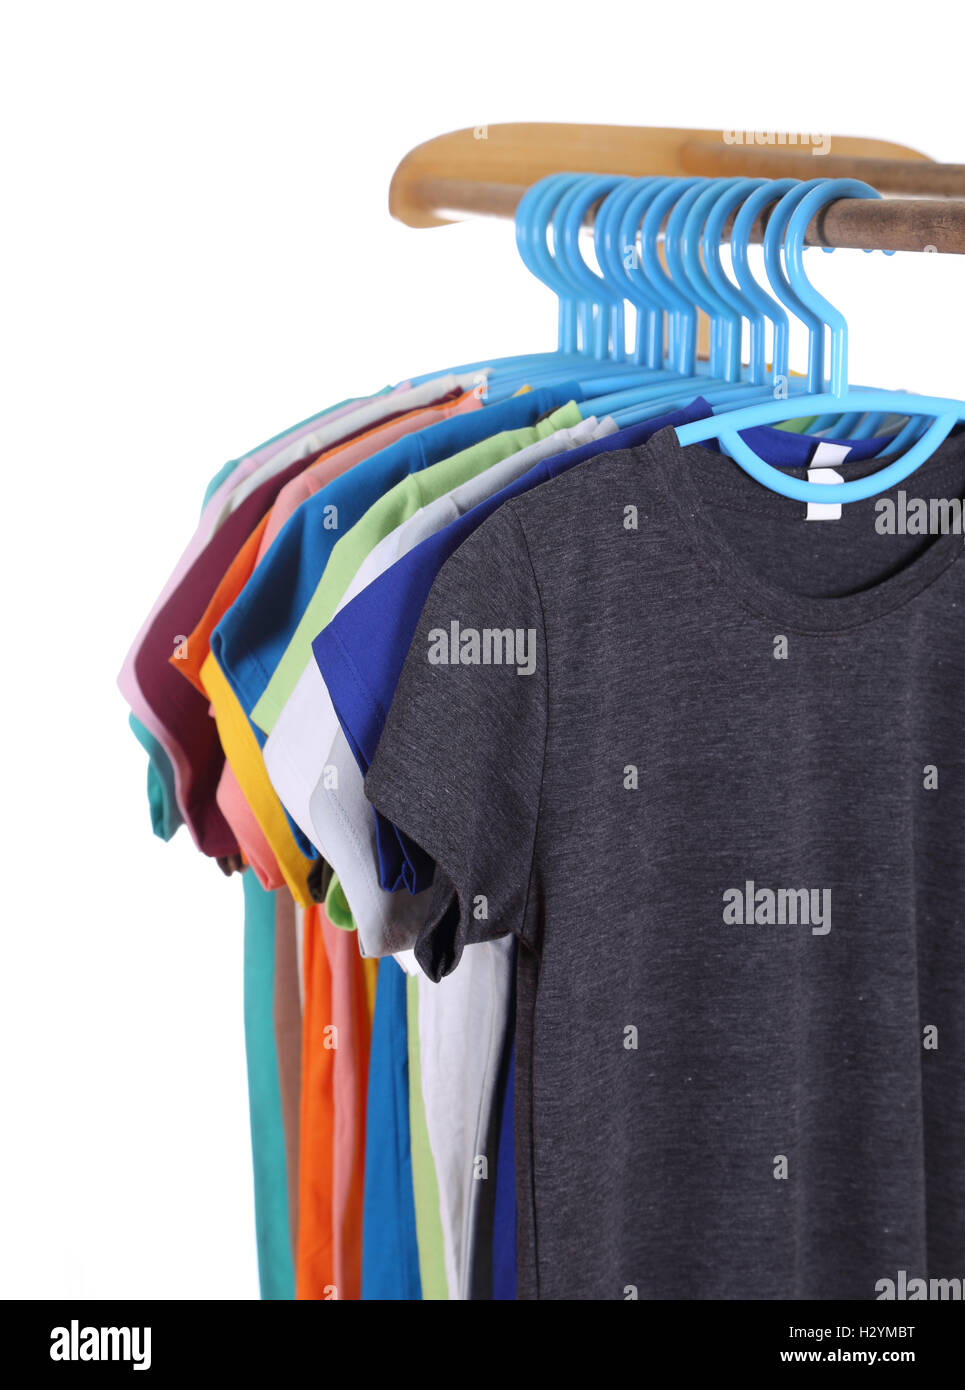 t-shirts hanging on hangers Stock Photo - Alamy